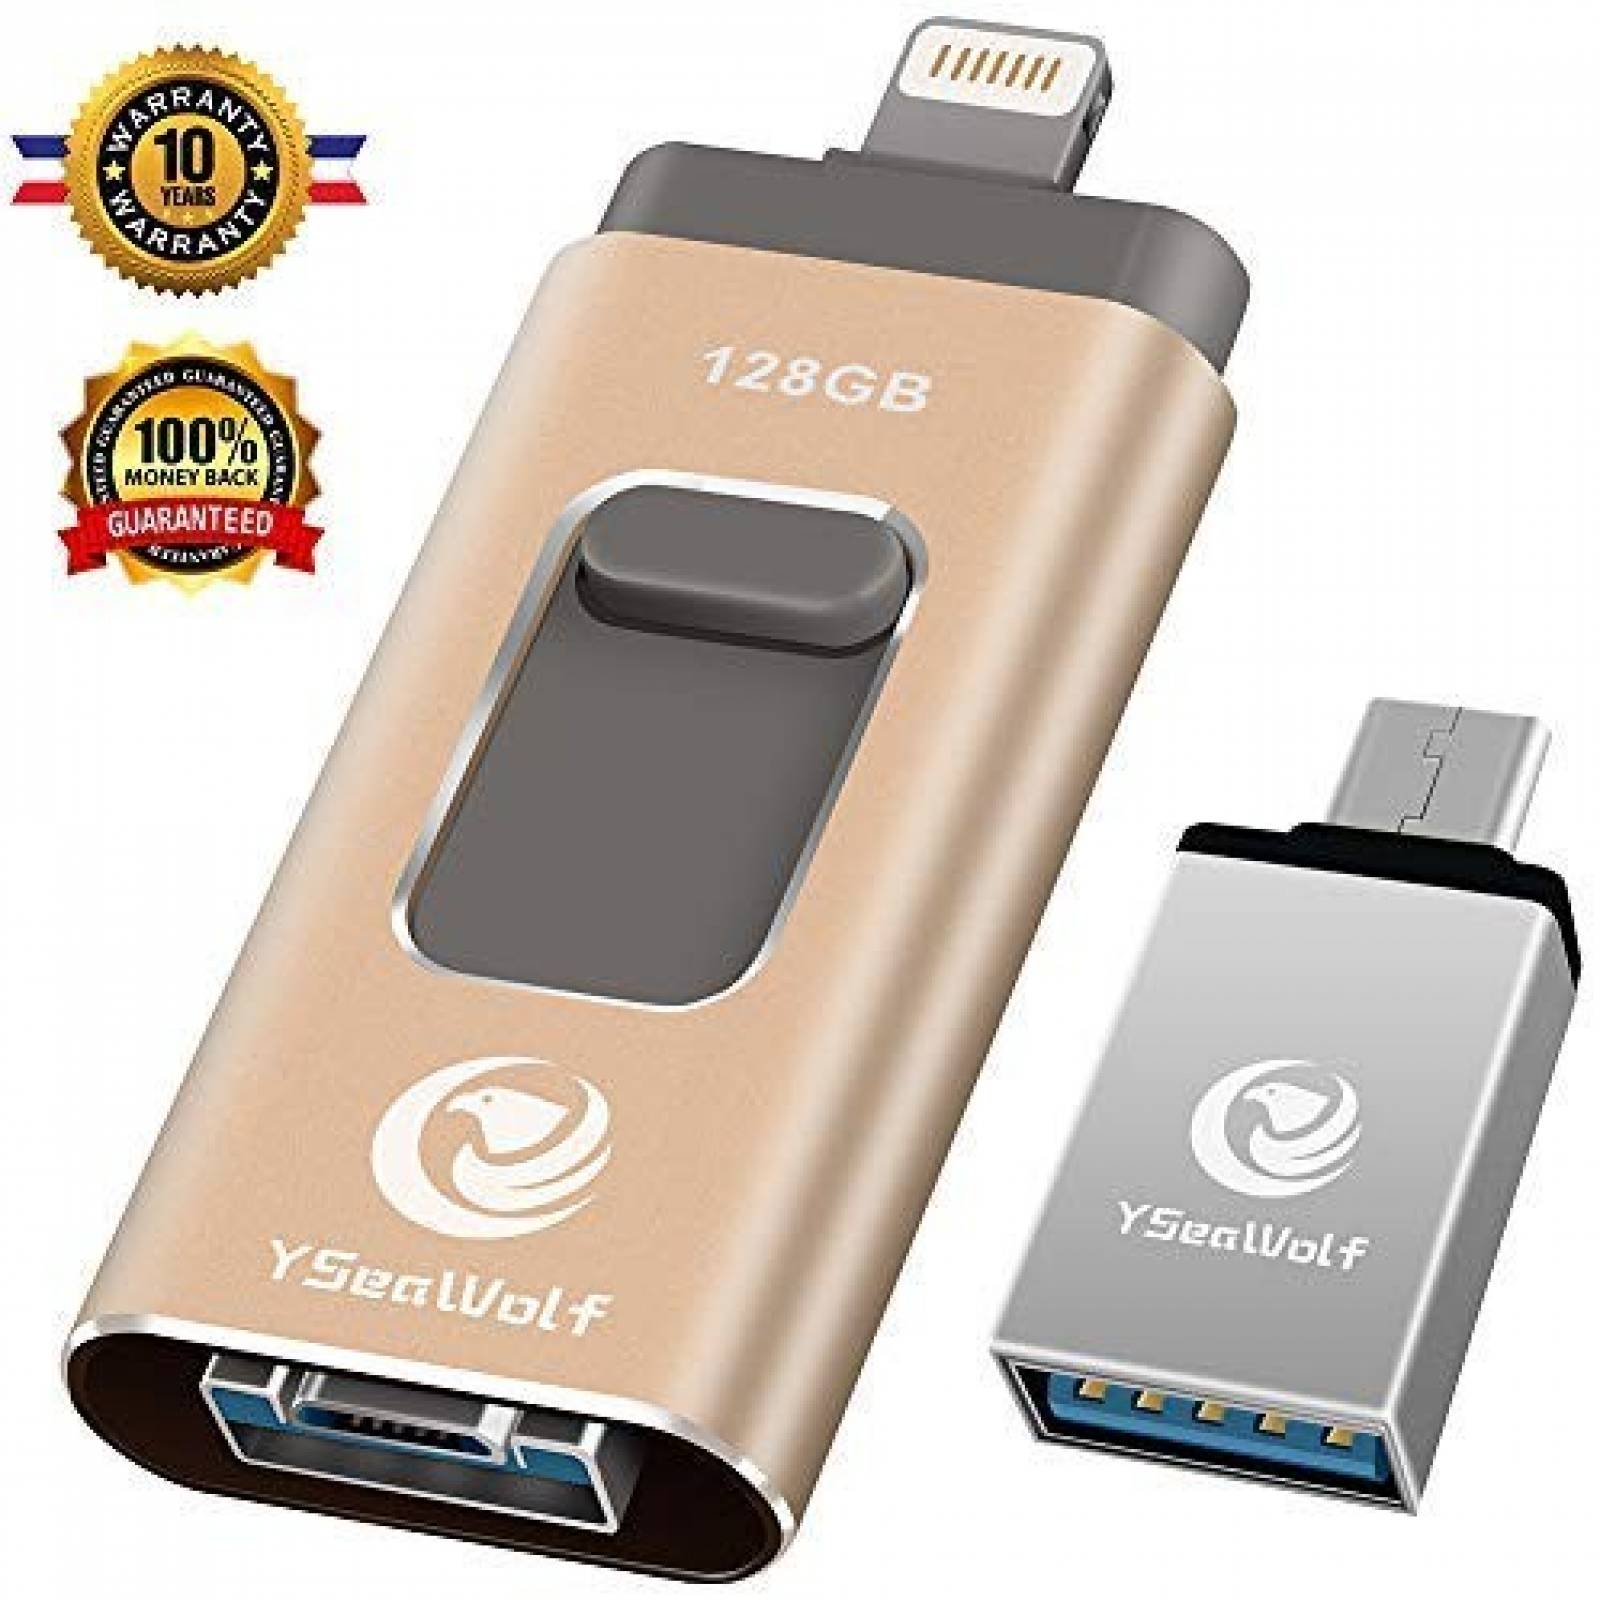 Memoria flash USB YSeaWolf Para iPhone 128GB -Dorado